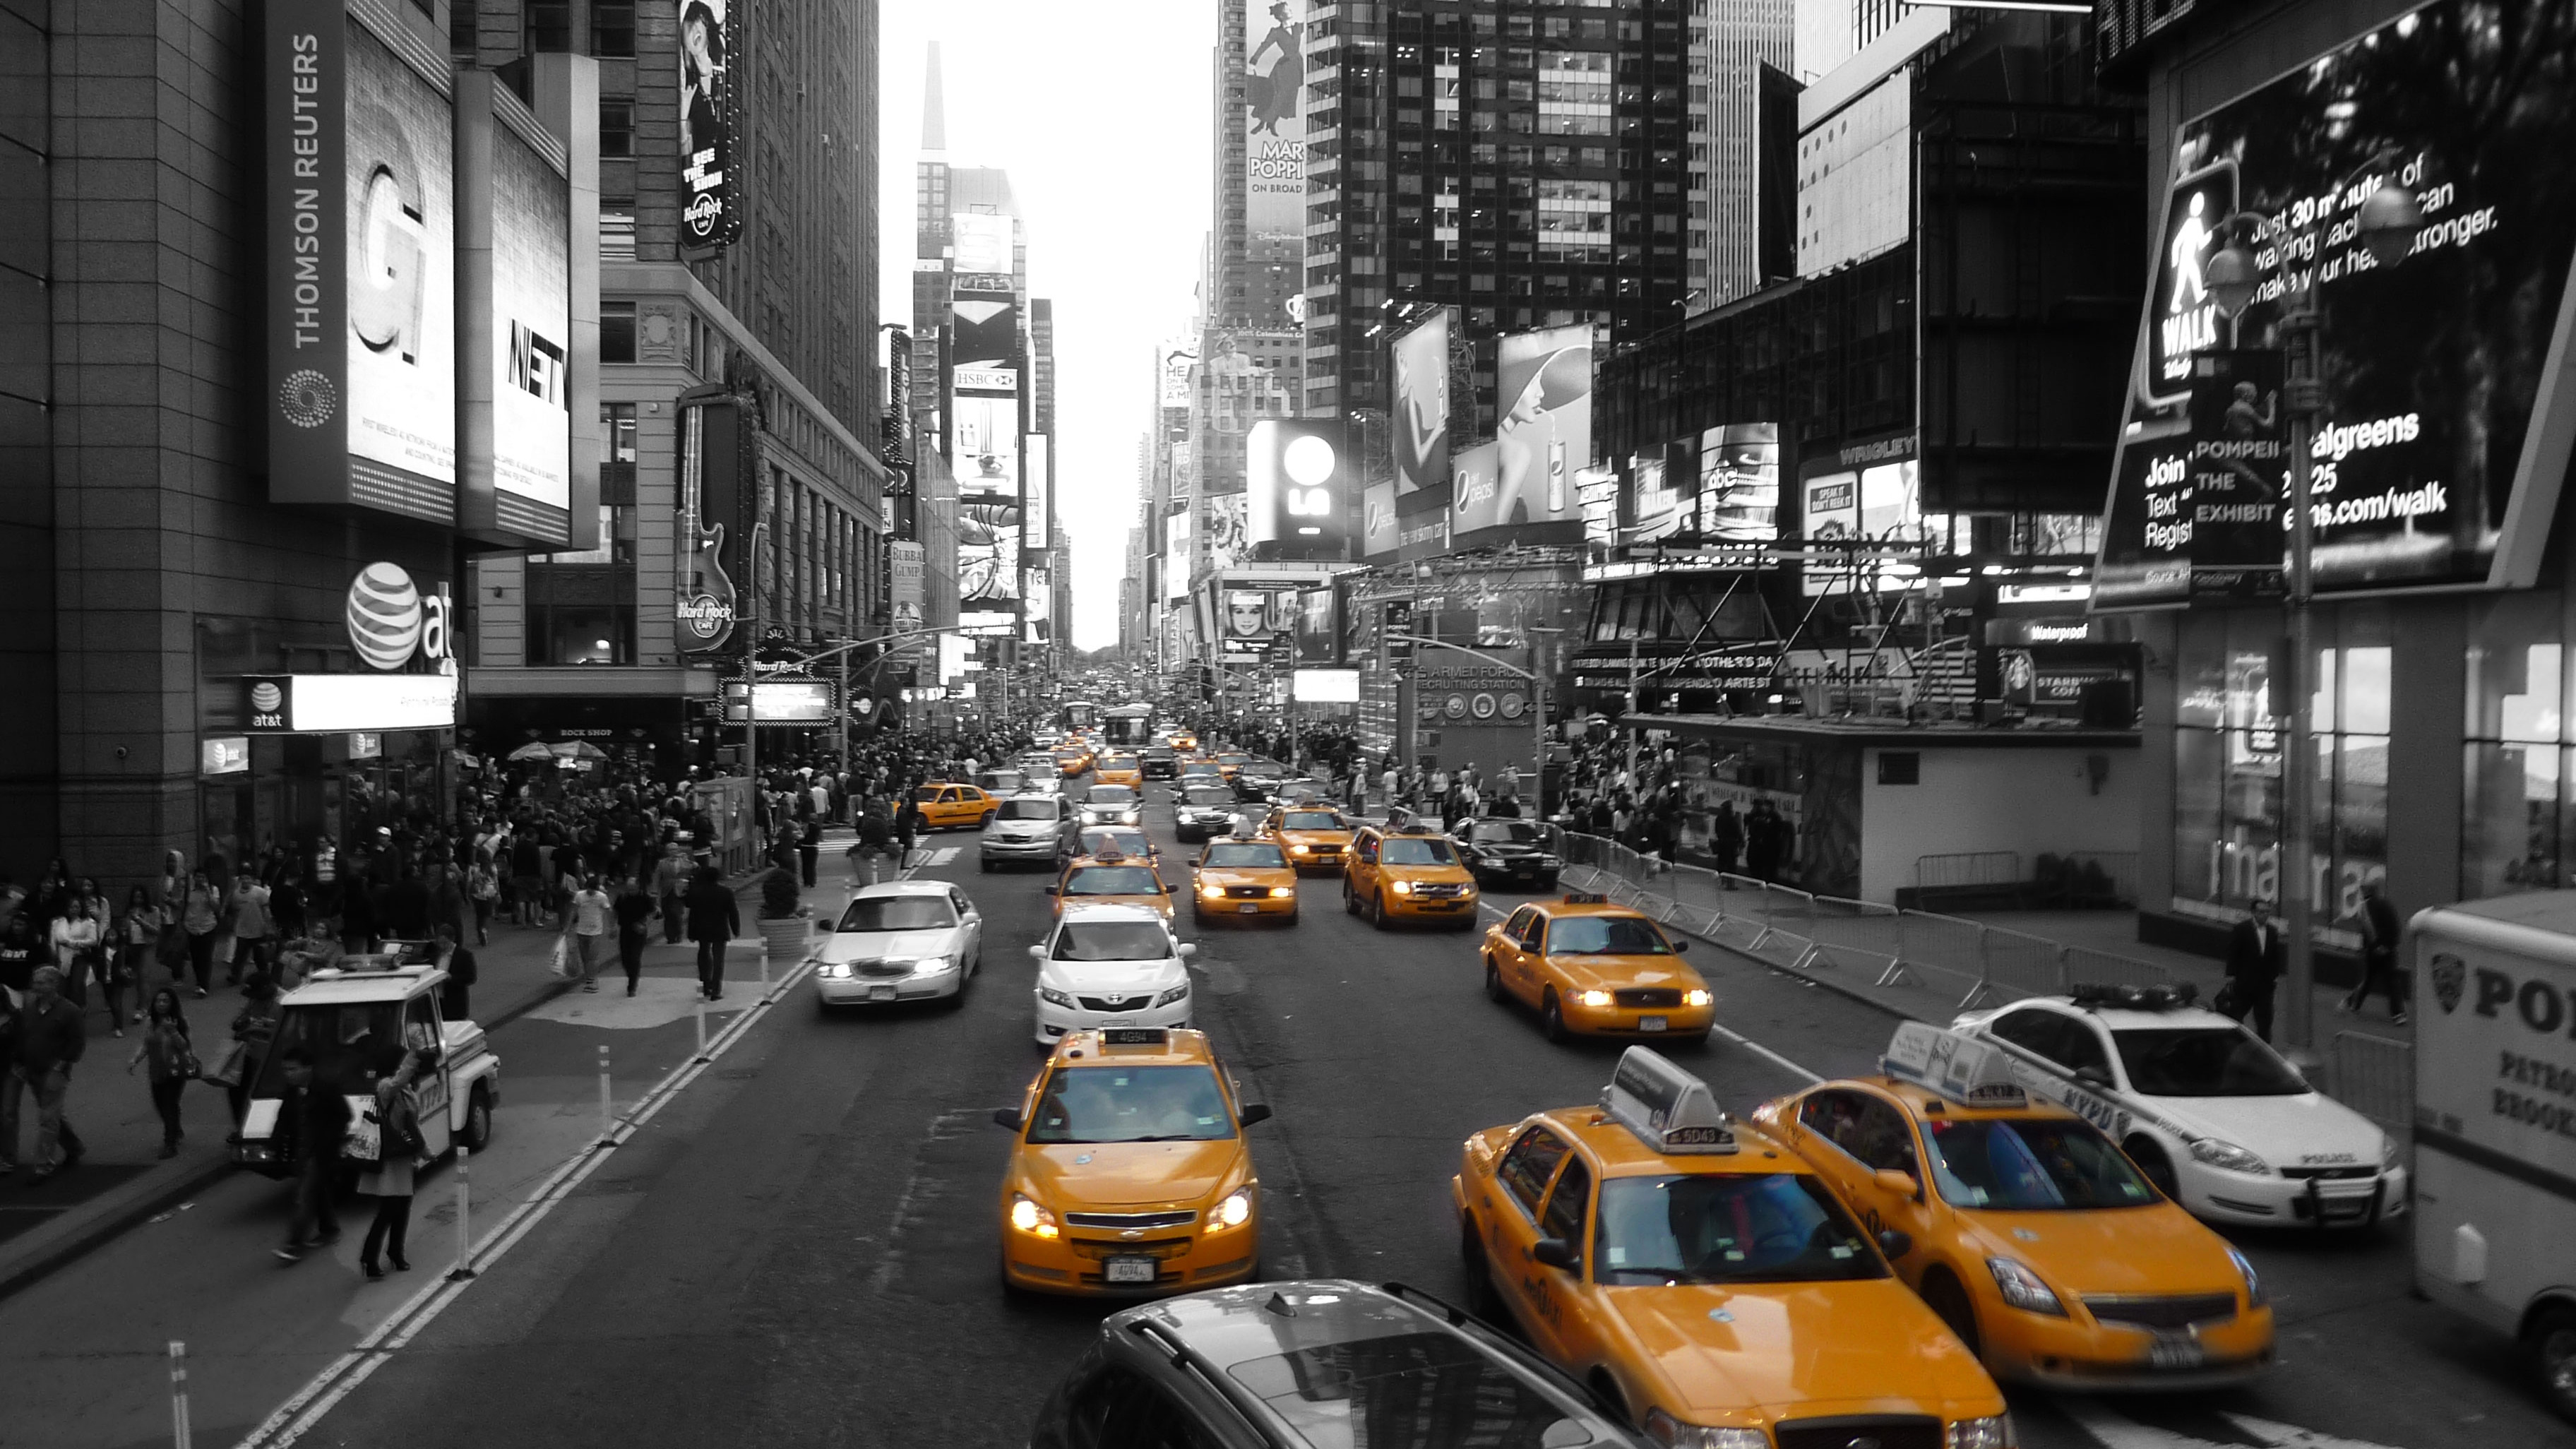 New York City, 510 HD wallpapers, City skyline backgrounds, 3650x2060 HD Desktop